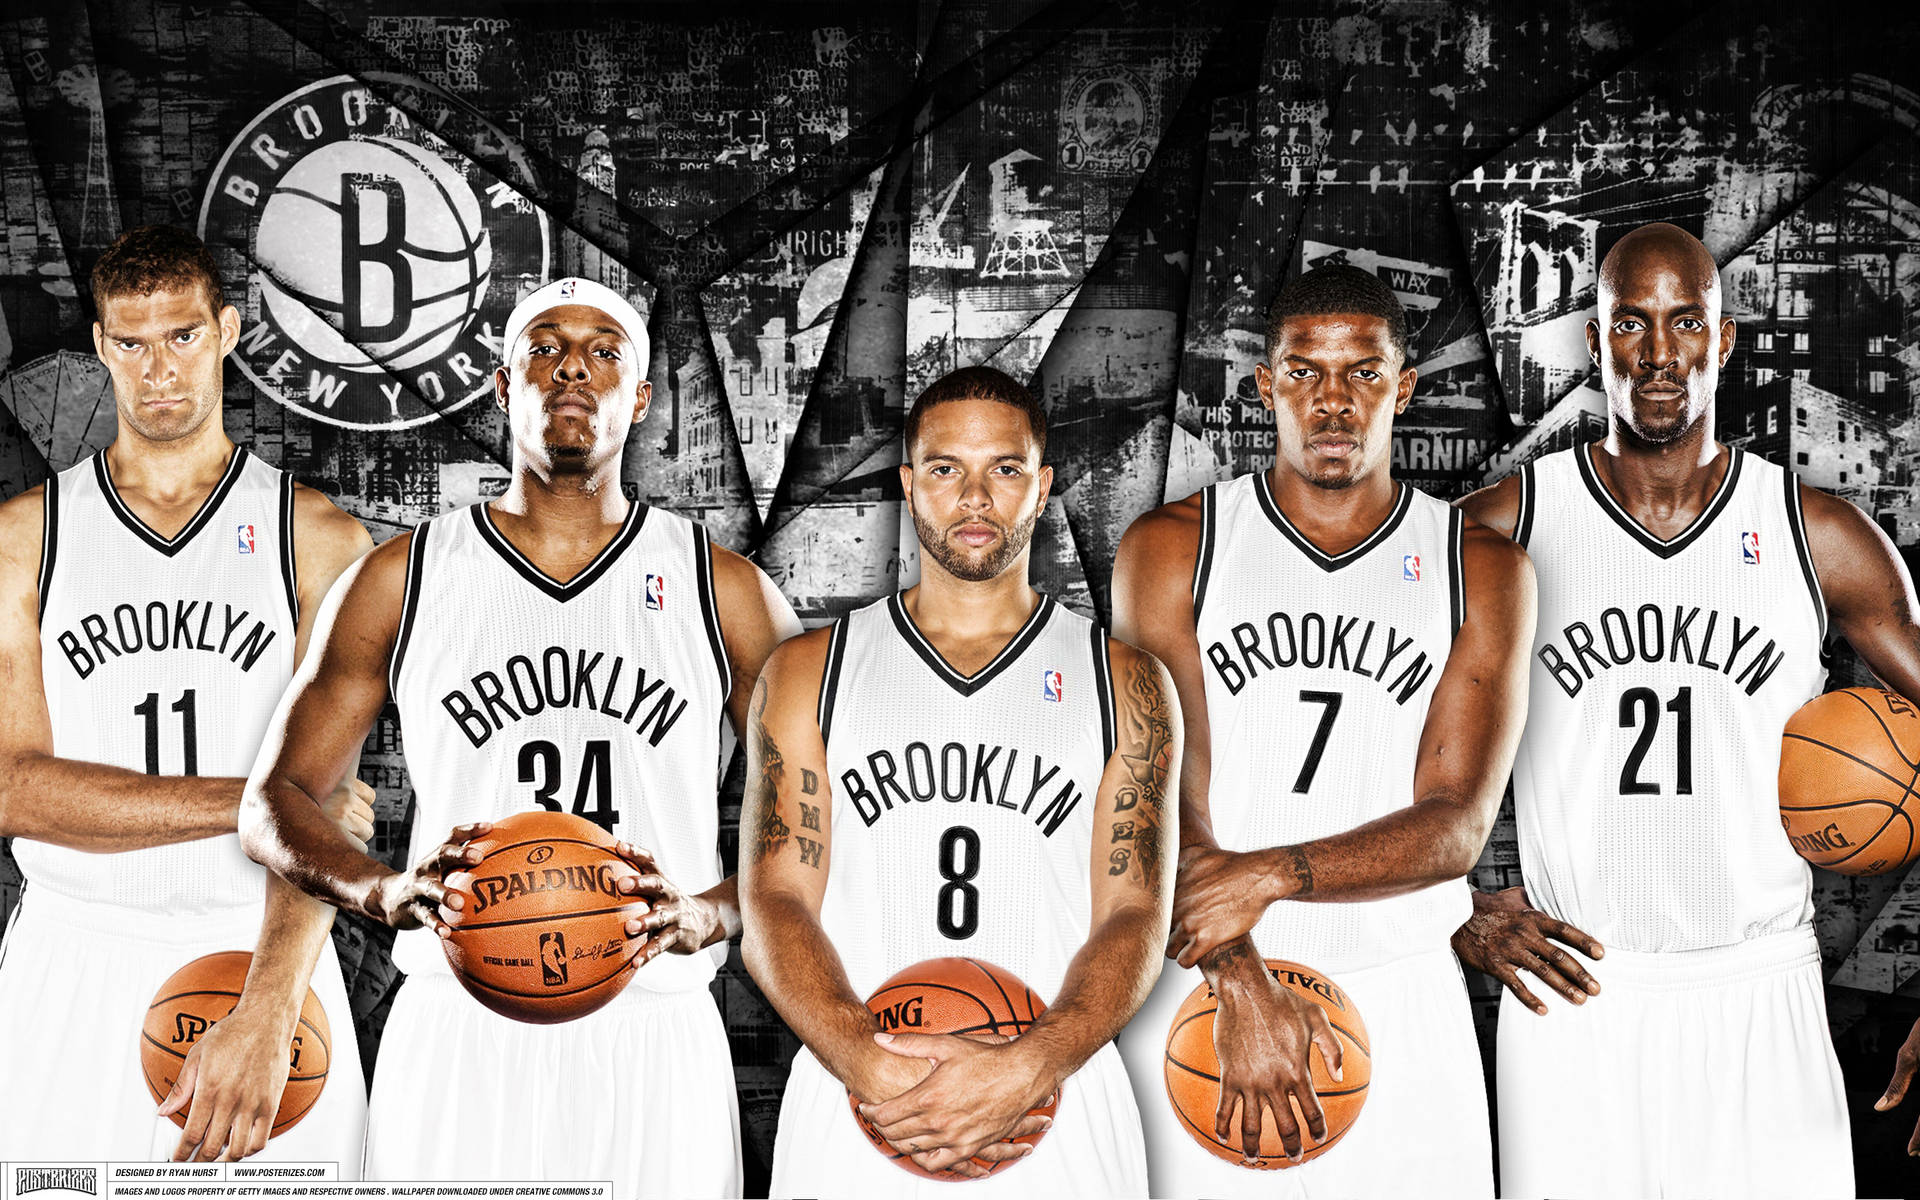 Top 999+ Brooklyn Nets Wallpaper Full HD, 4K Free to Use